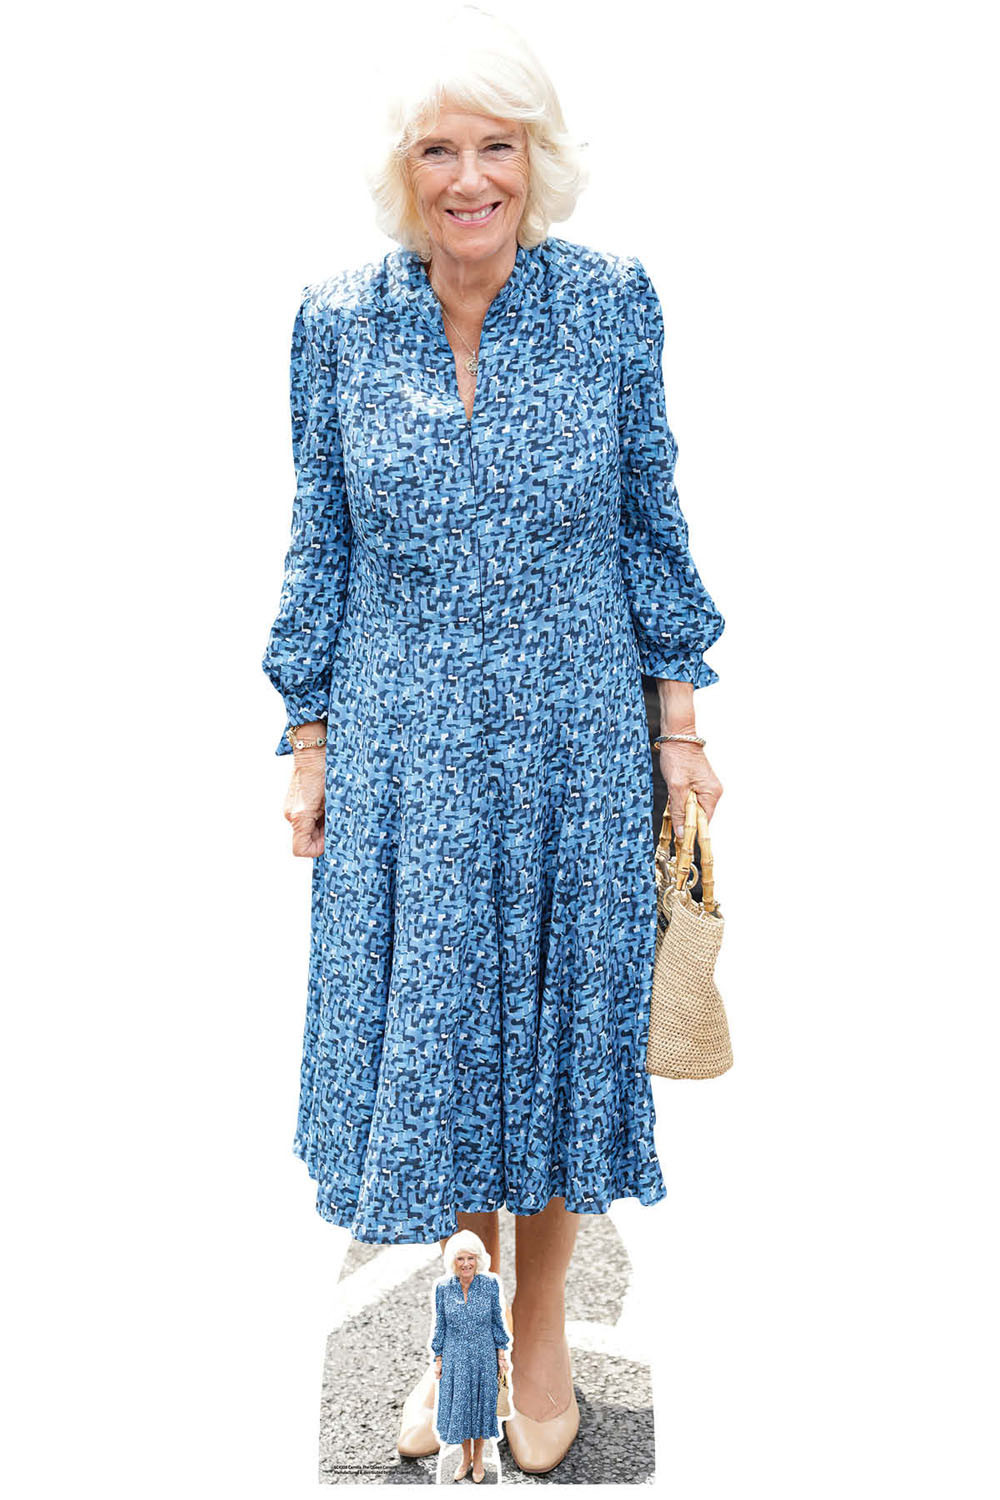 Camilla Queen Consort Blue Dress Lifesize Cardboard Cutout / Standee